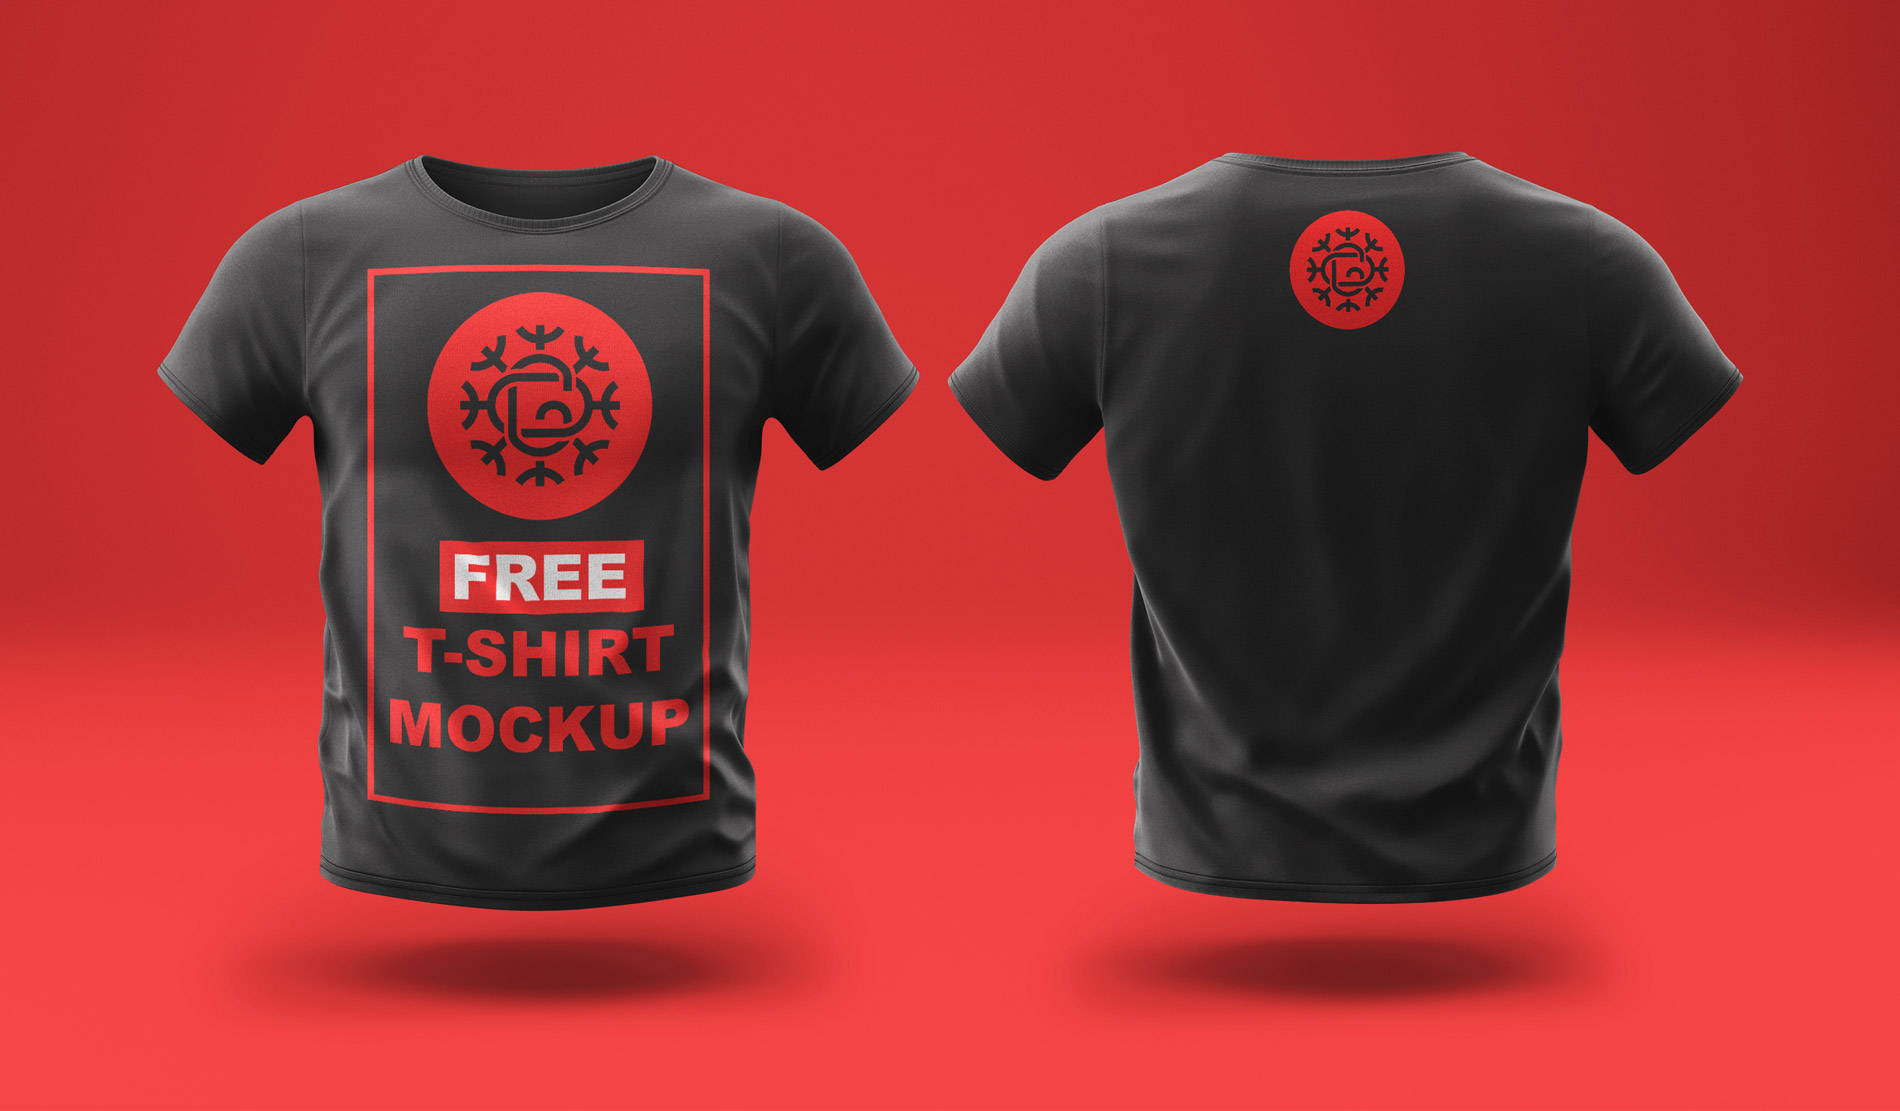 Alleviation group Duke Free Free Short Sleeve Front & Back T-shirt Mockup PSD- PsFiles